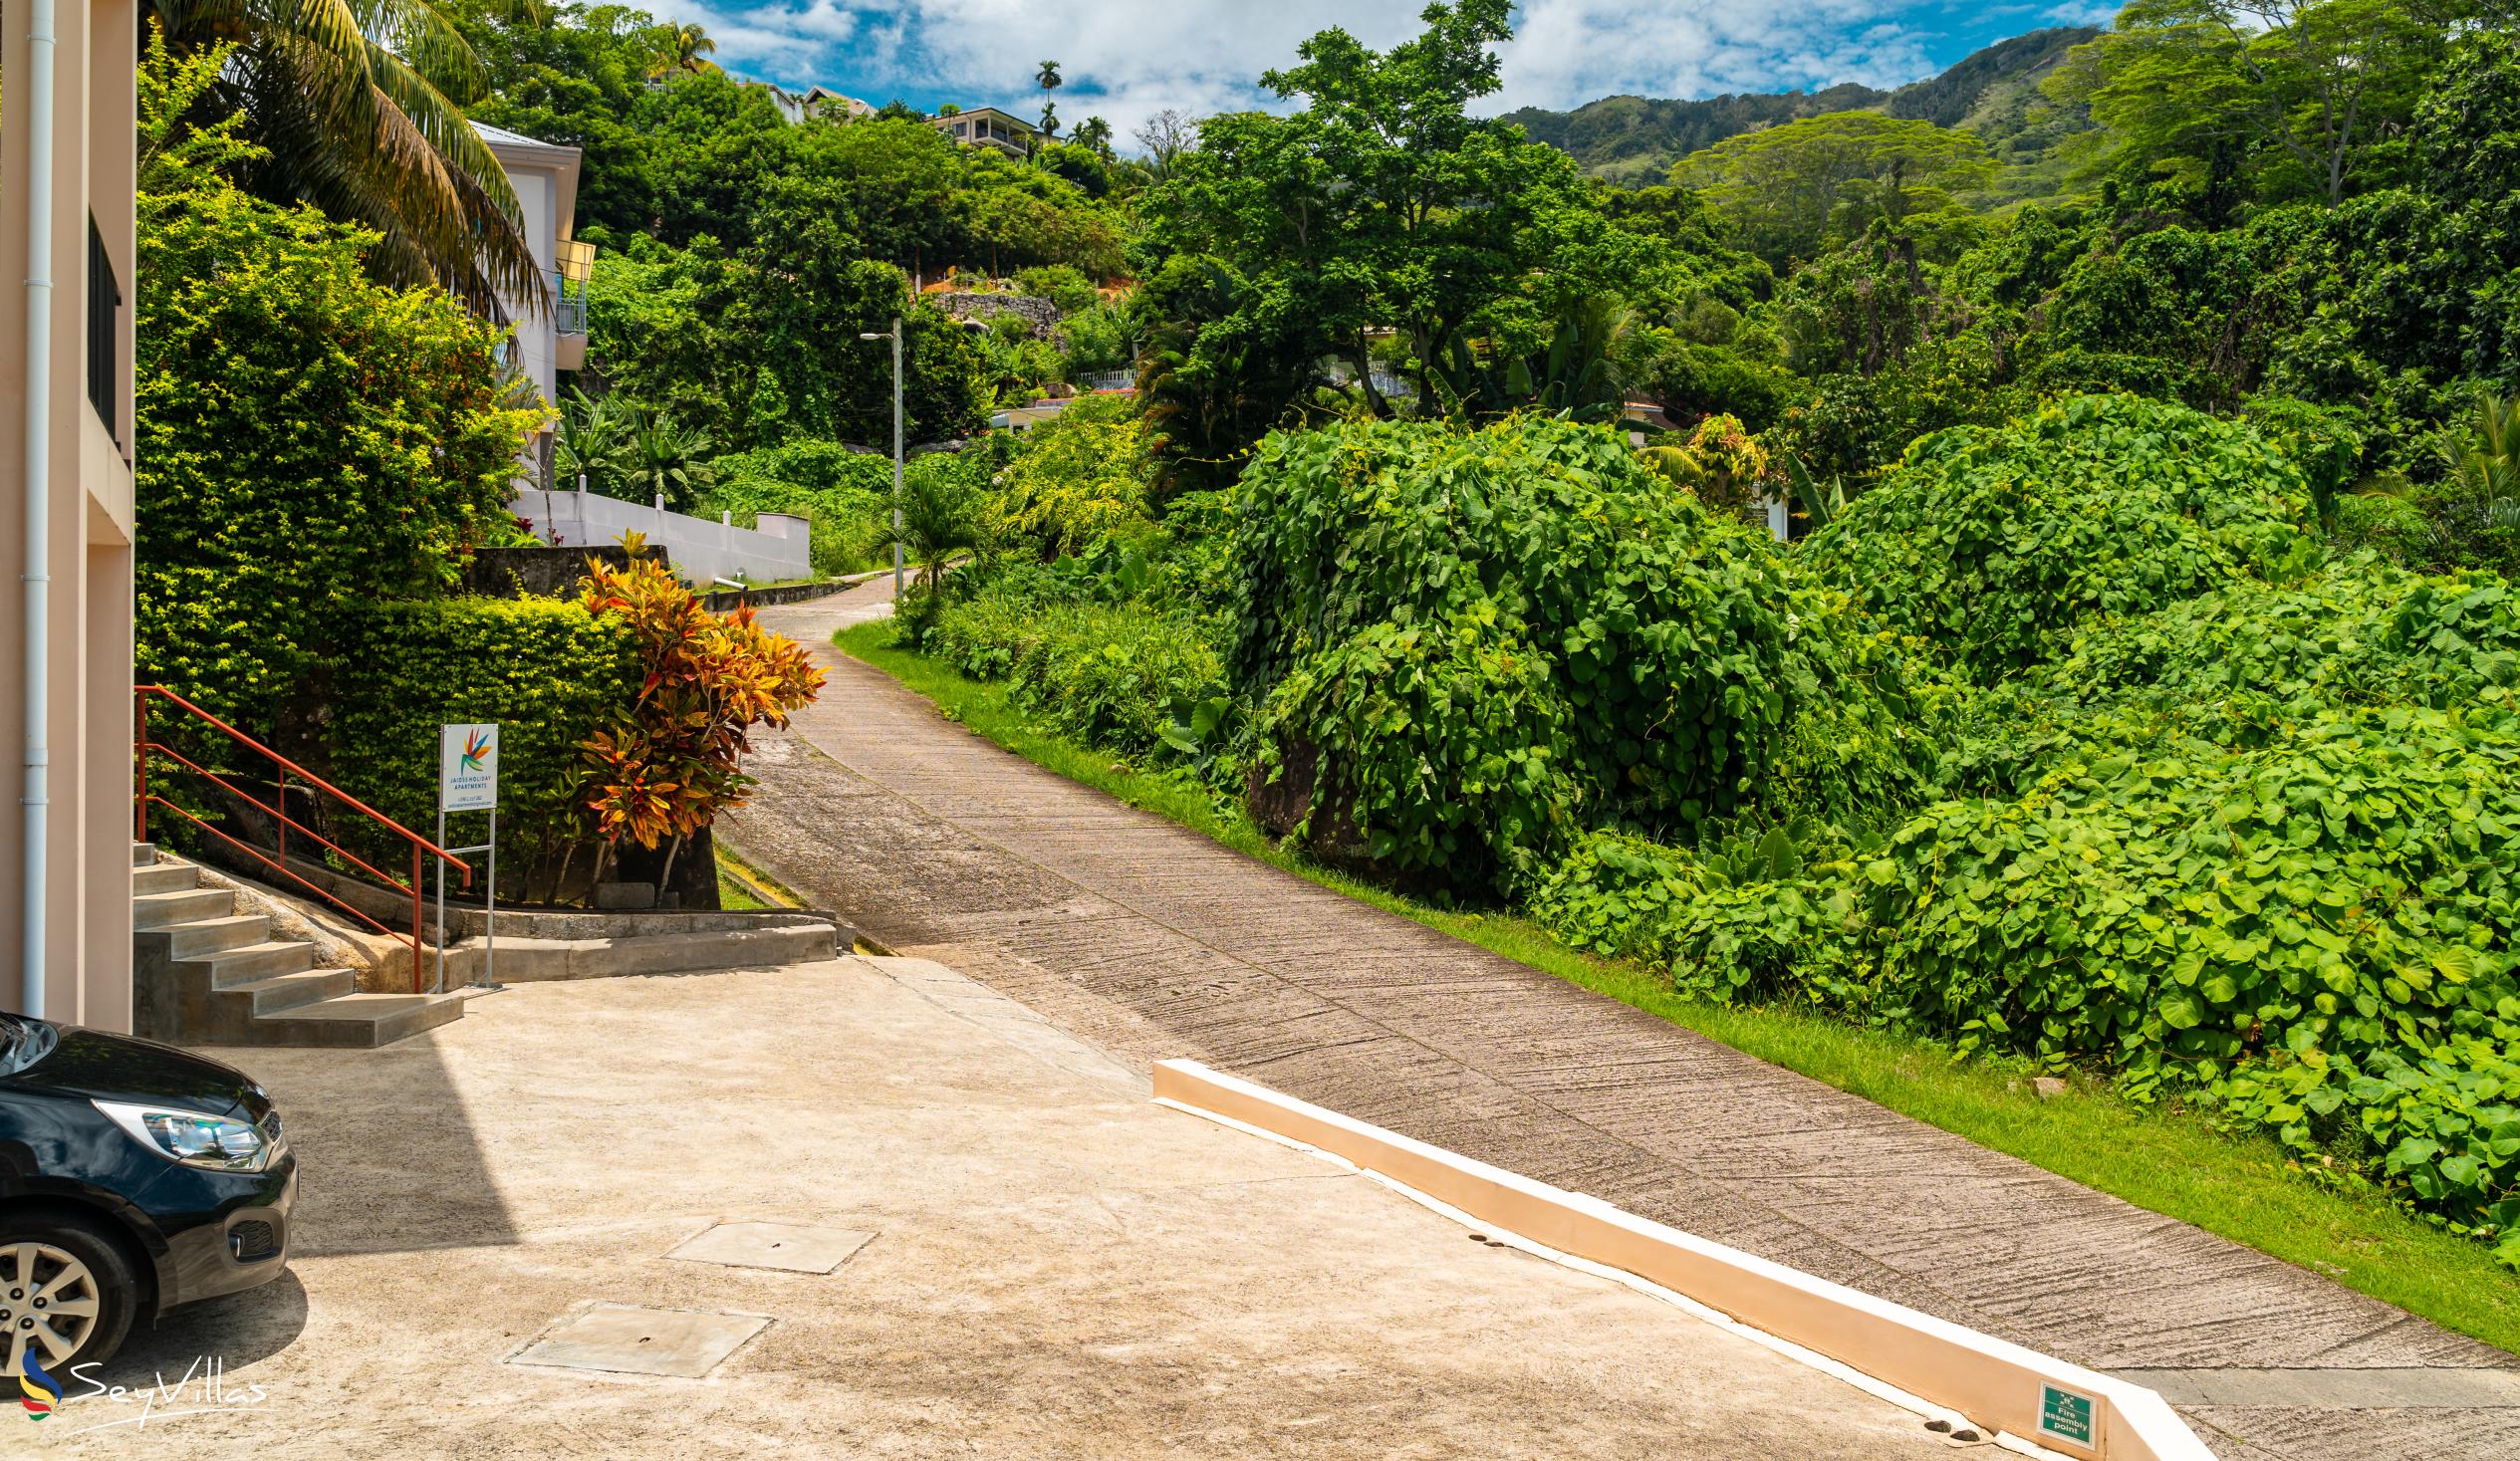 Photo 14: JAIDSS Holiday Apartments - Outdoor area - Mahé (Seychelles)